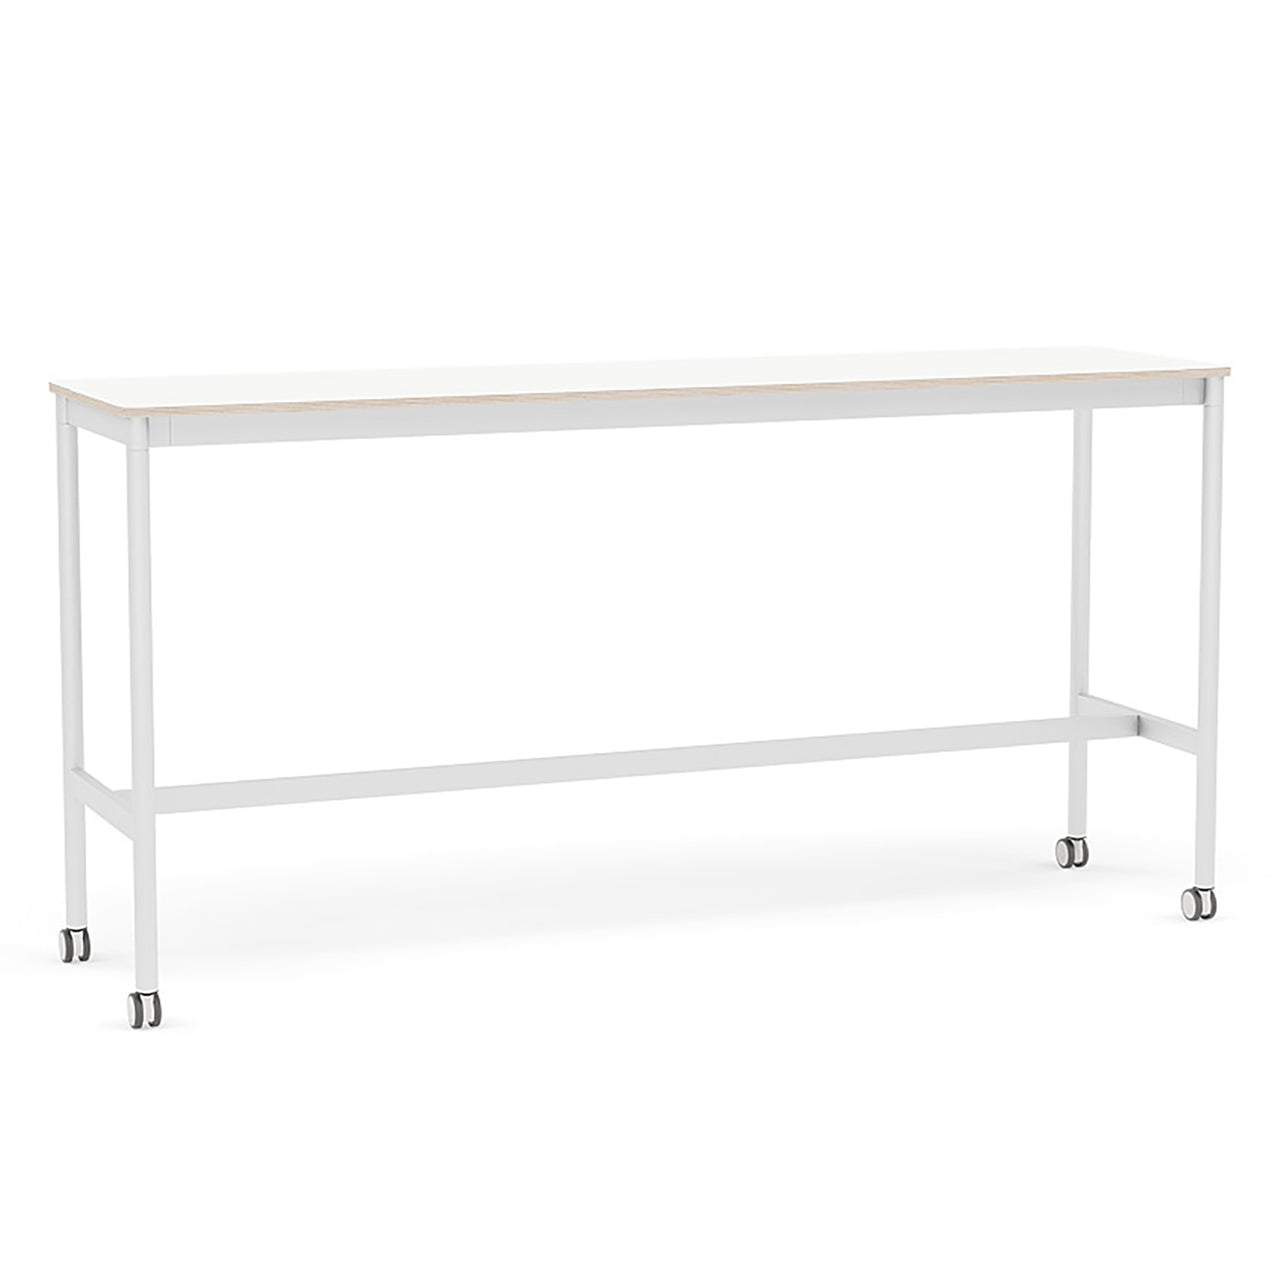 Base High Table with Castors: 190 + White Laminate + Plywood Edge + White